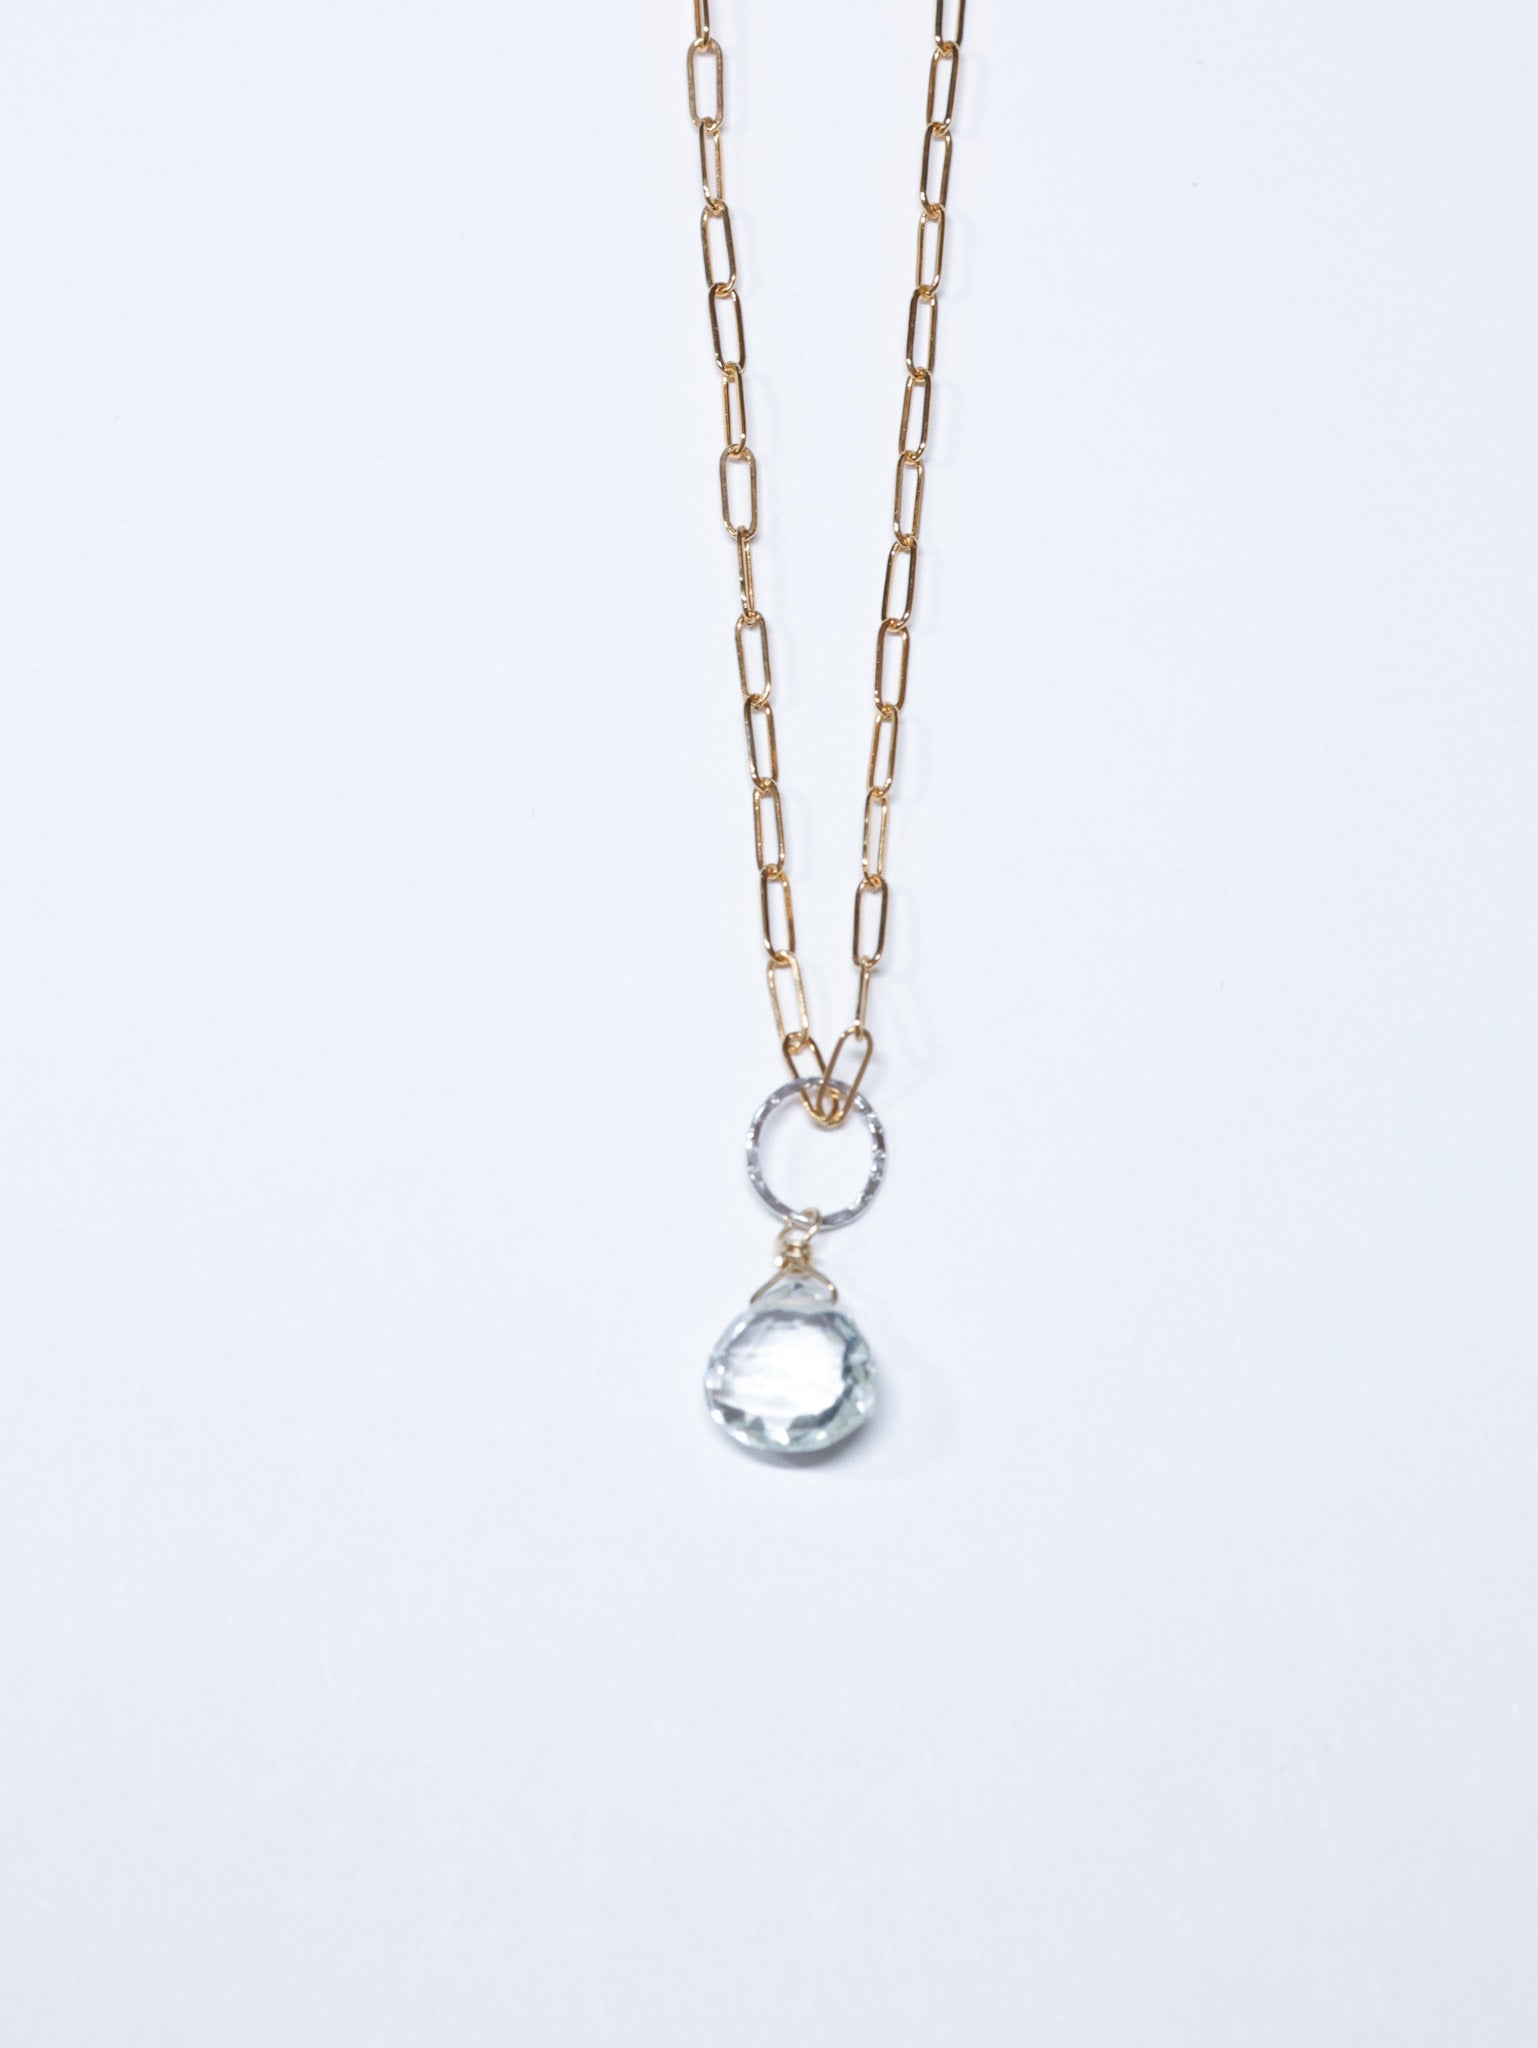 Pale Aquamarine pendant necklace -gold filled